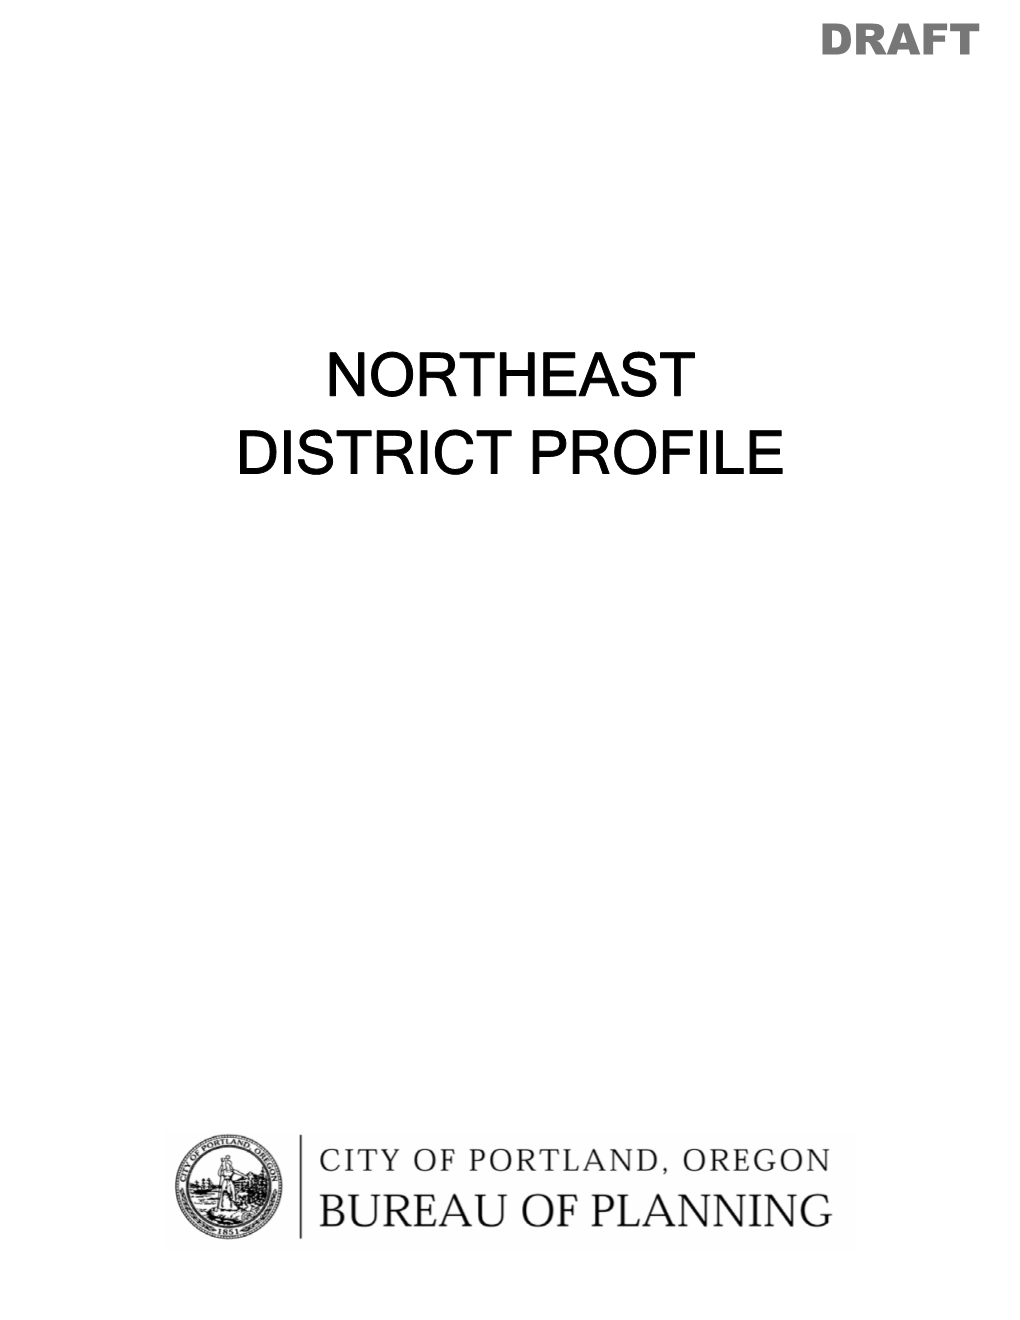 Draft Northeast Portland District Profile